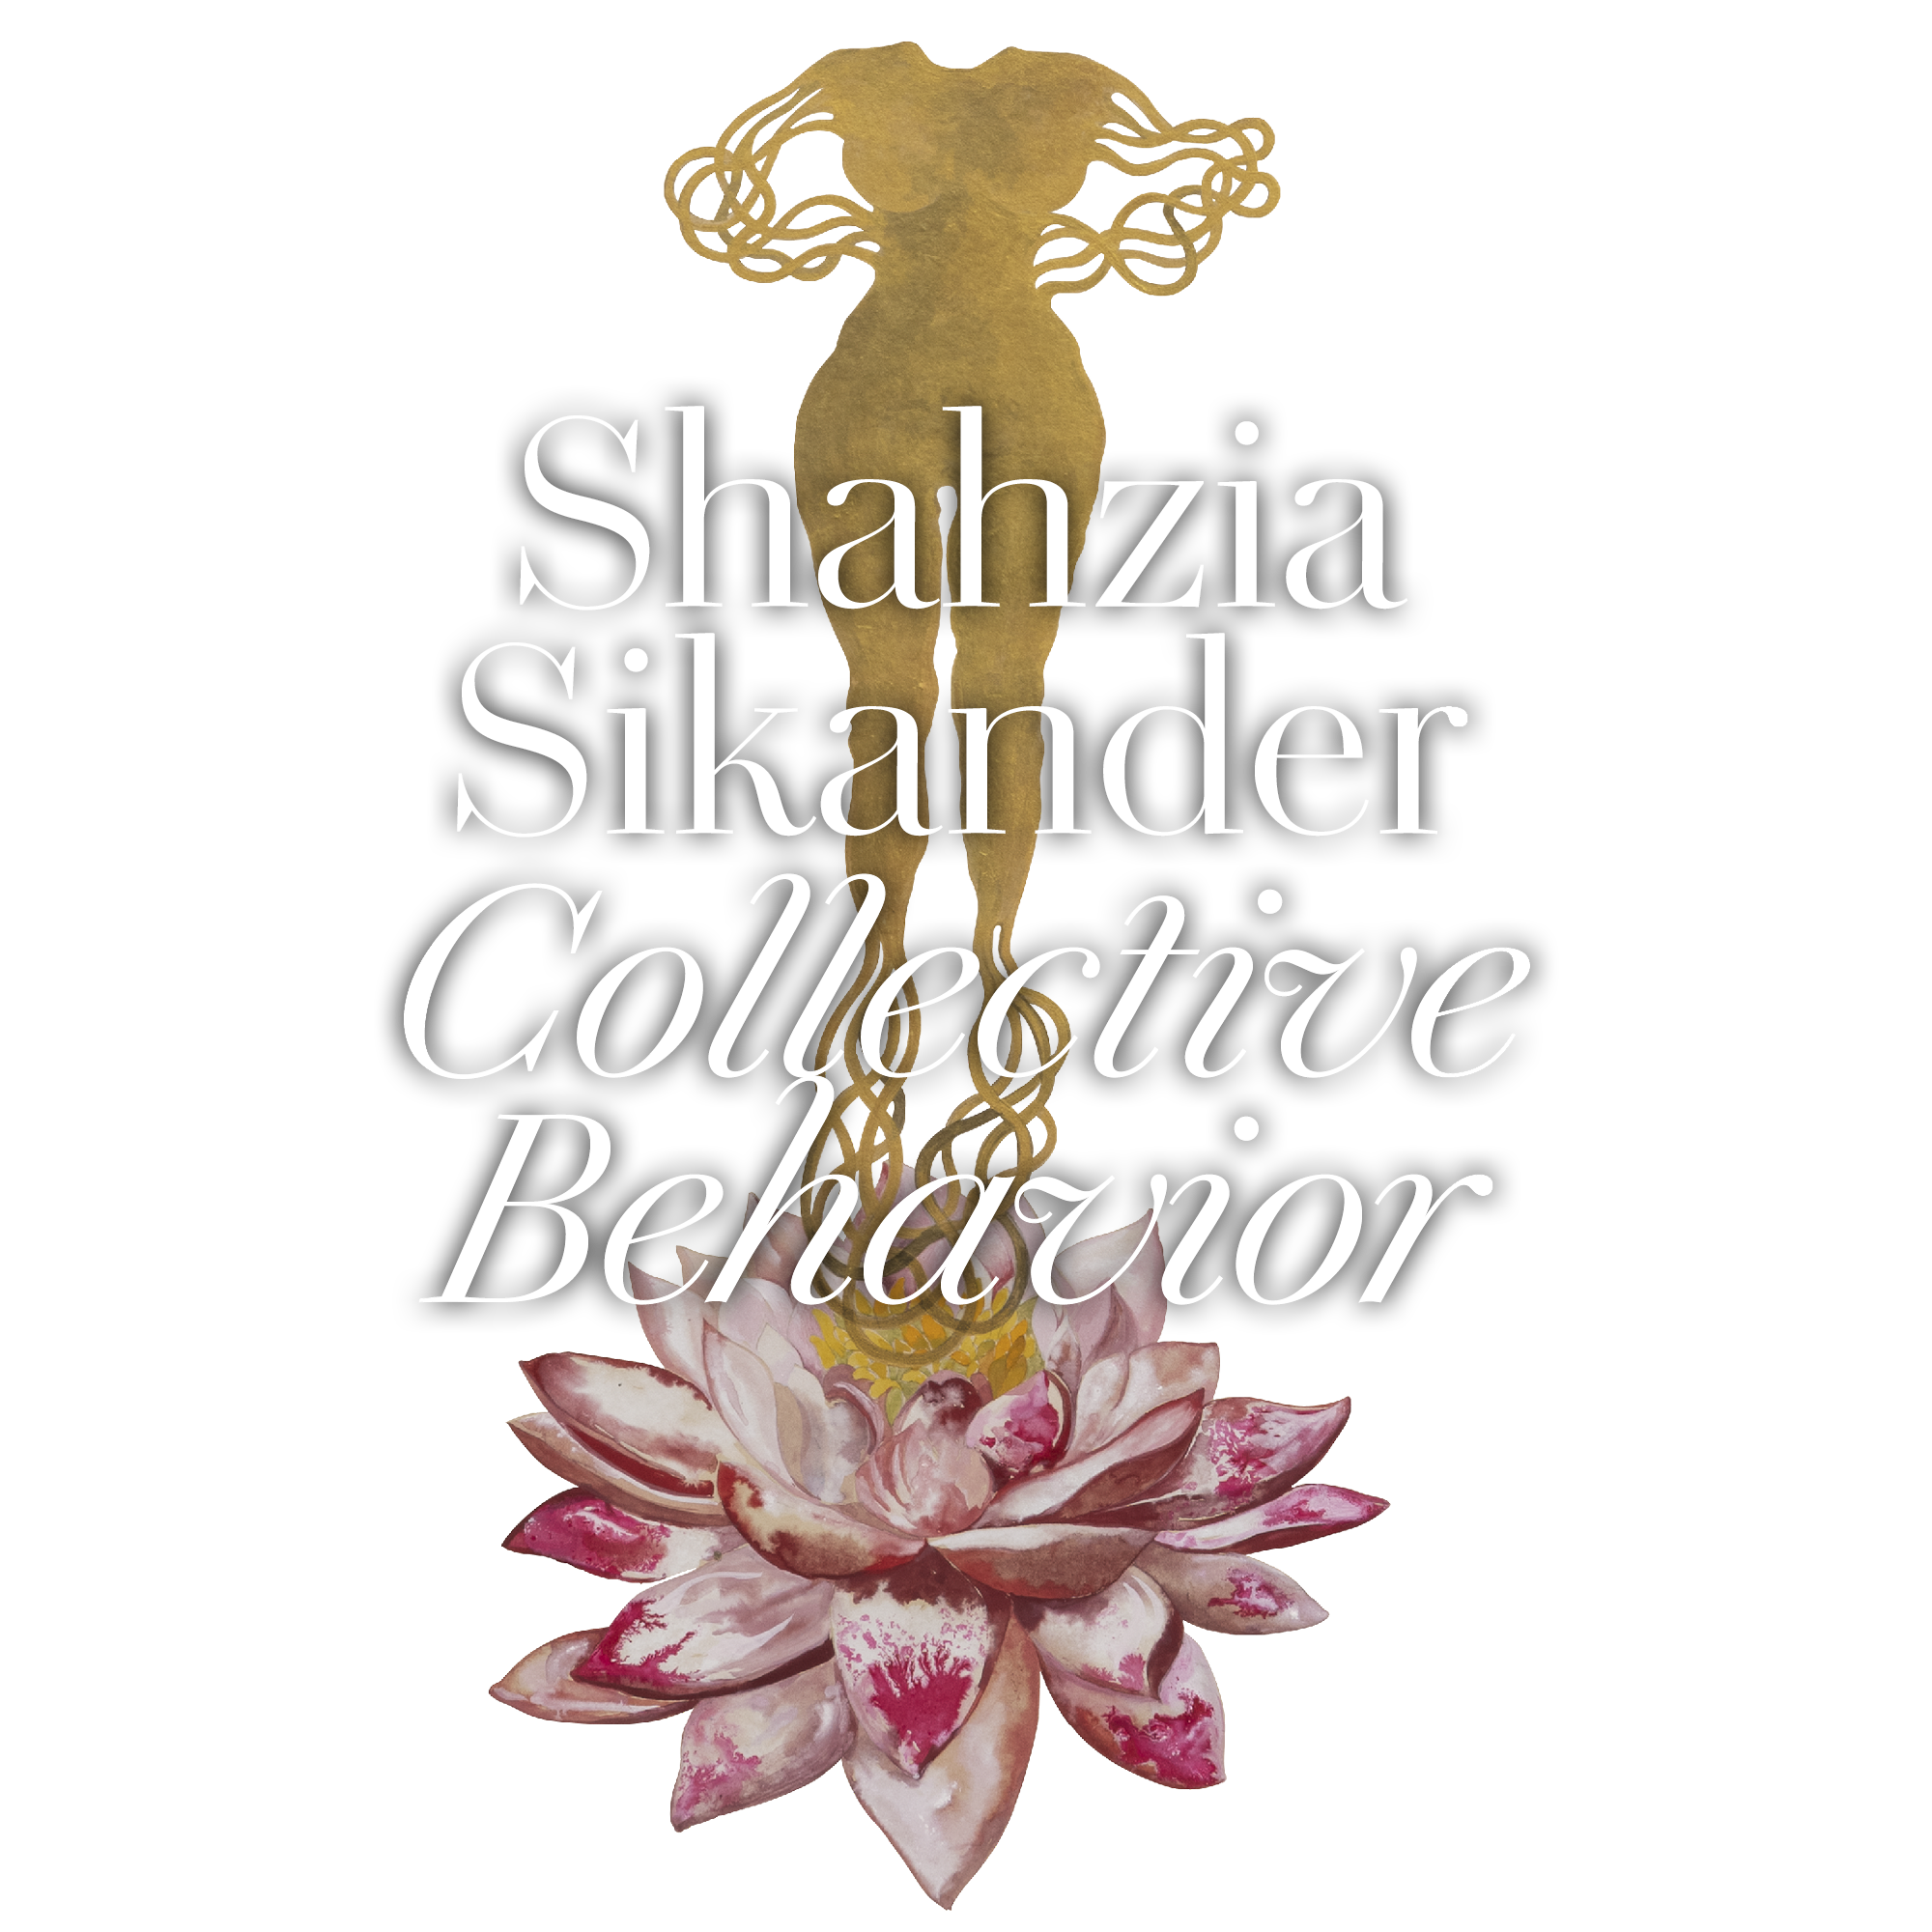 Shahzia Collective Behavior